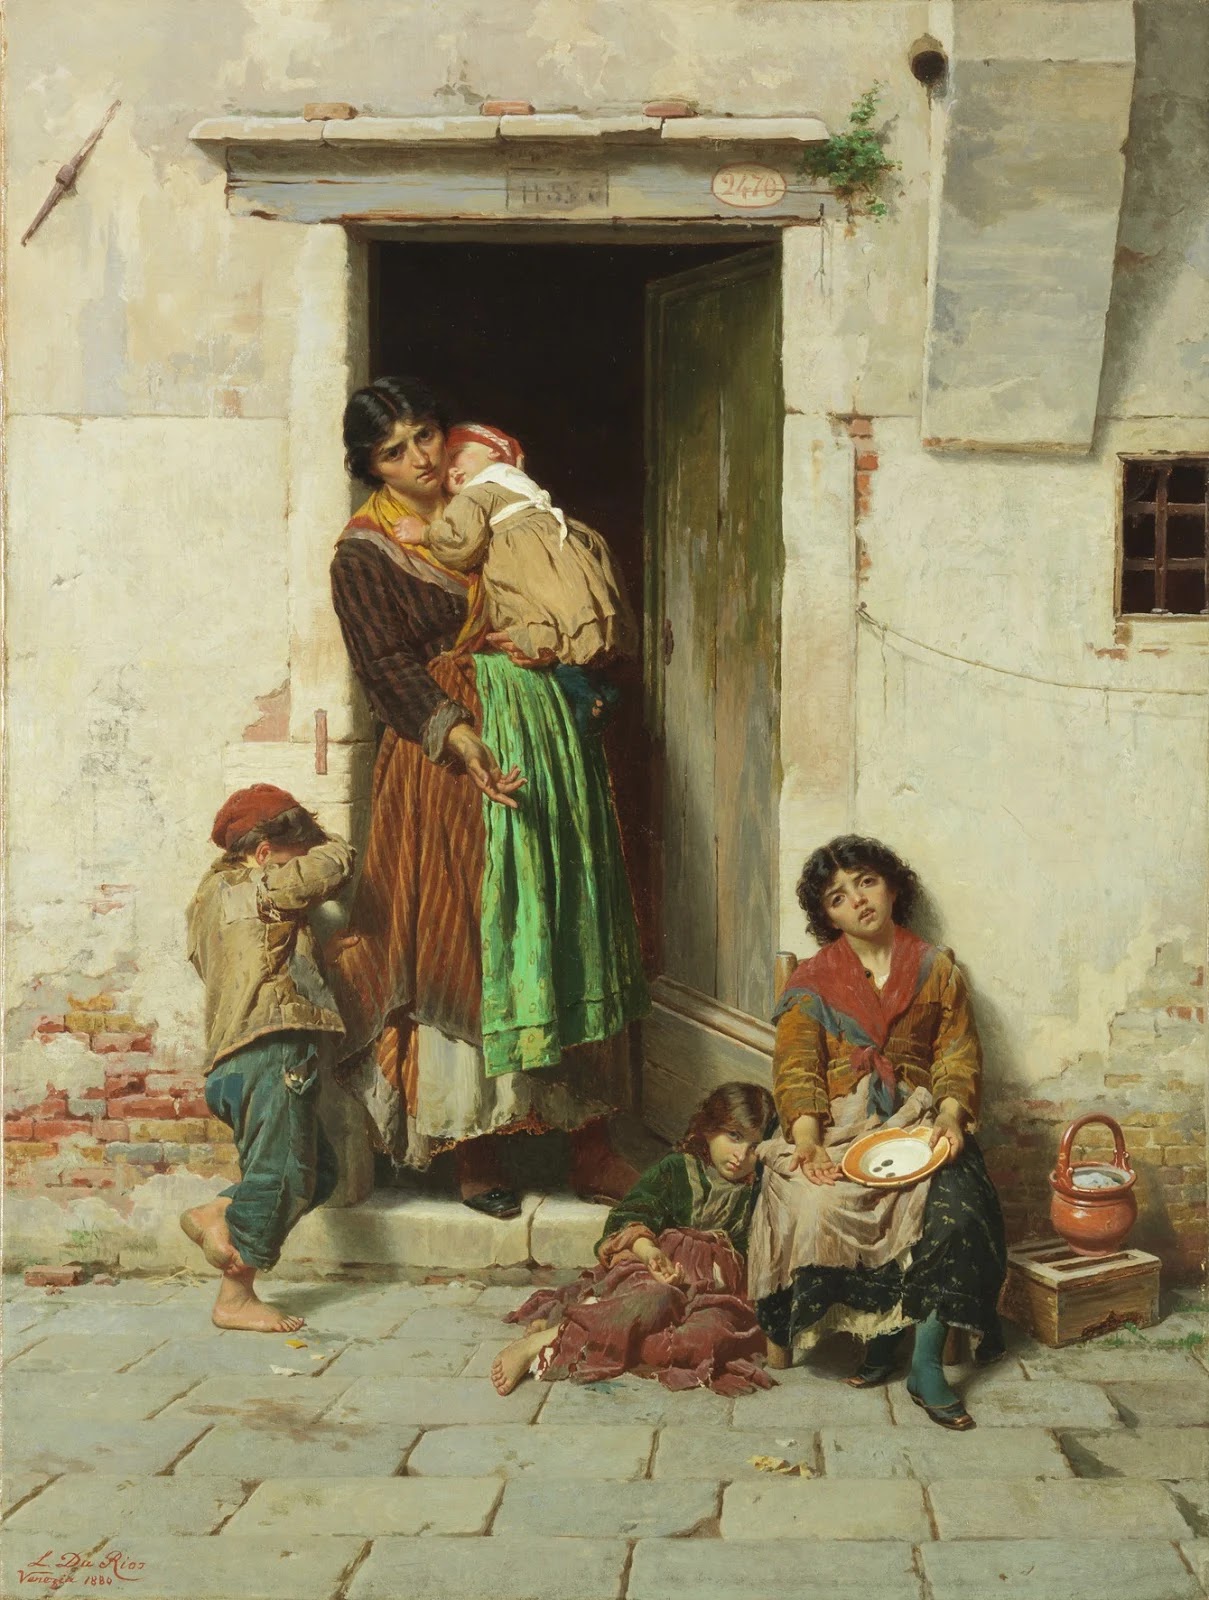 Luigi da Rios(1843-1892) | An Italian Genre Painter